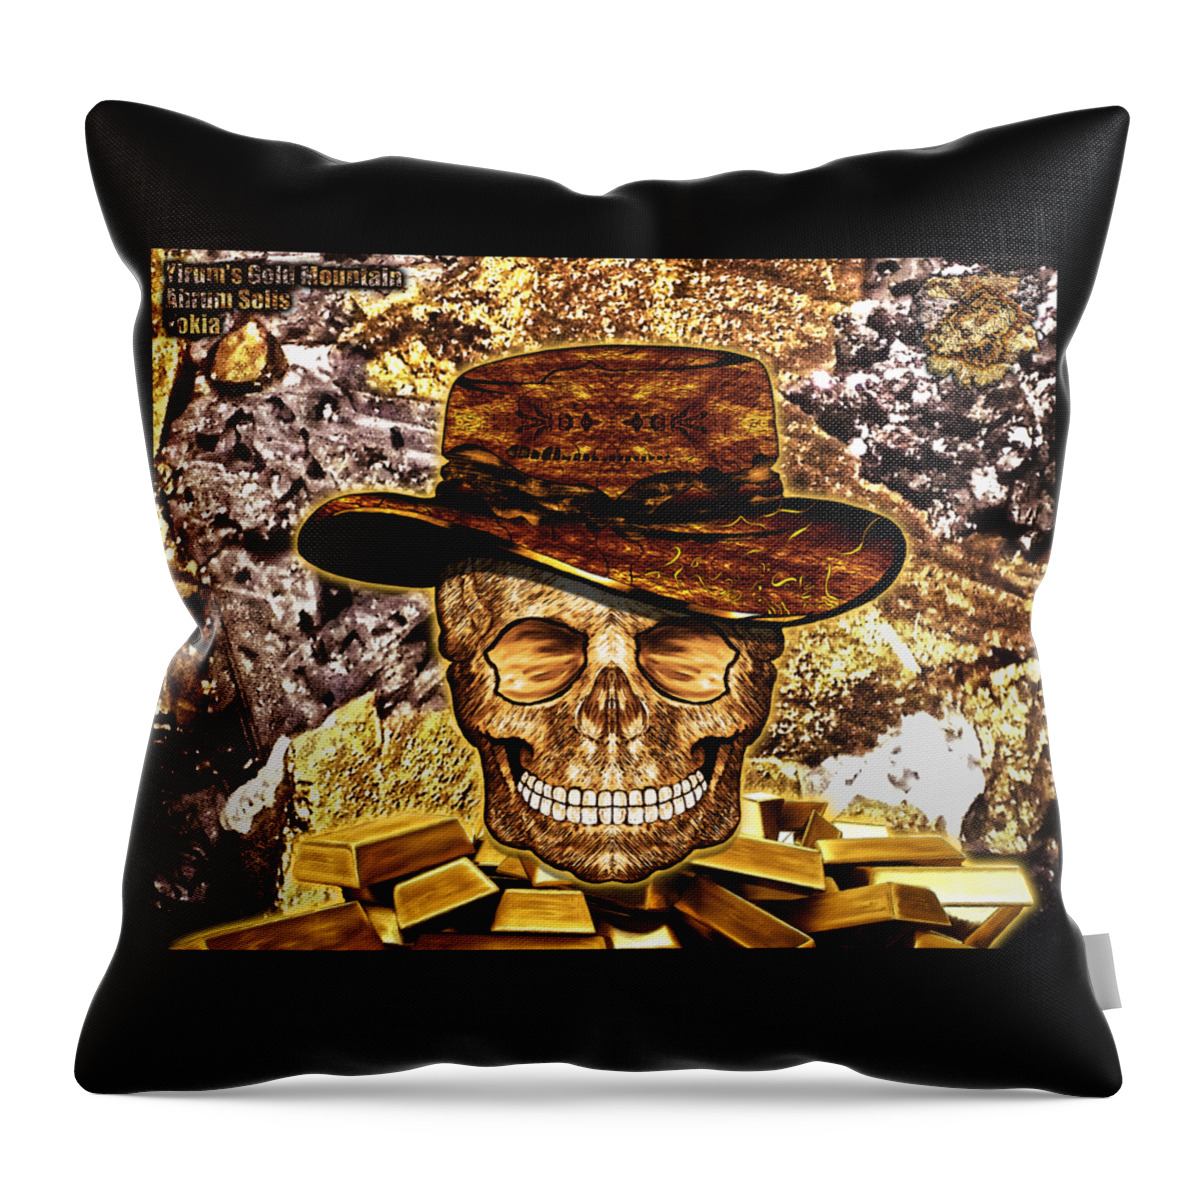 Bars Throw Pillow featuring the digital art Yirum's Gold Mountain by YokTomato